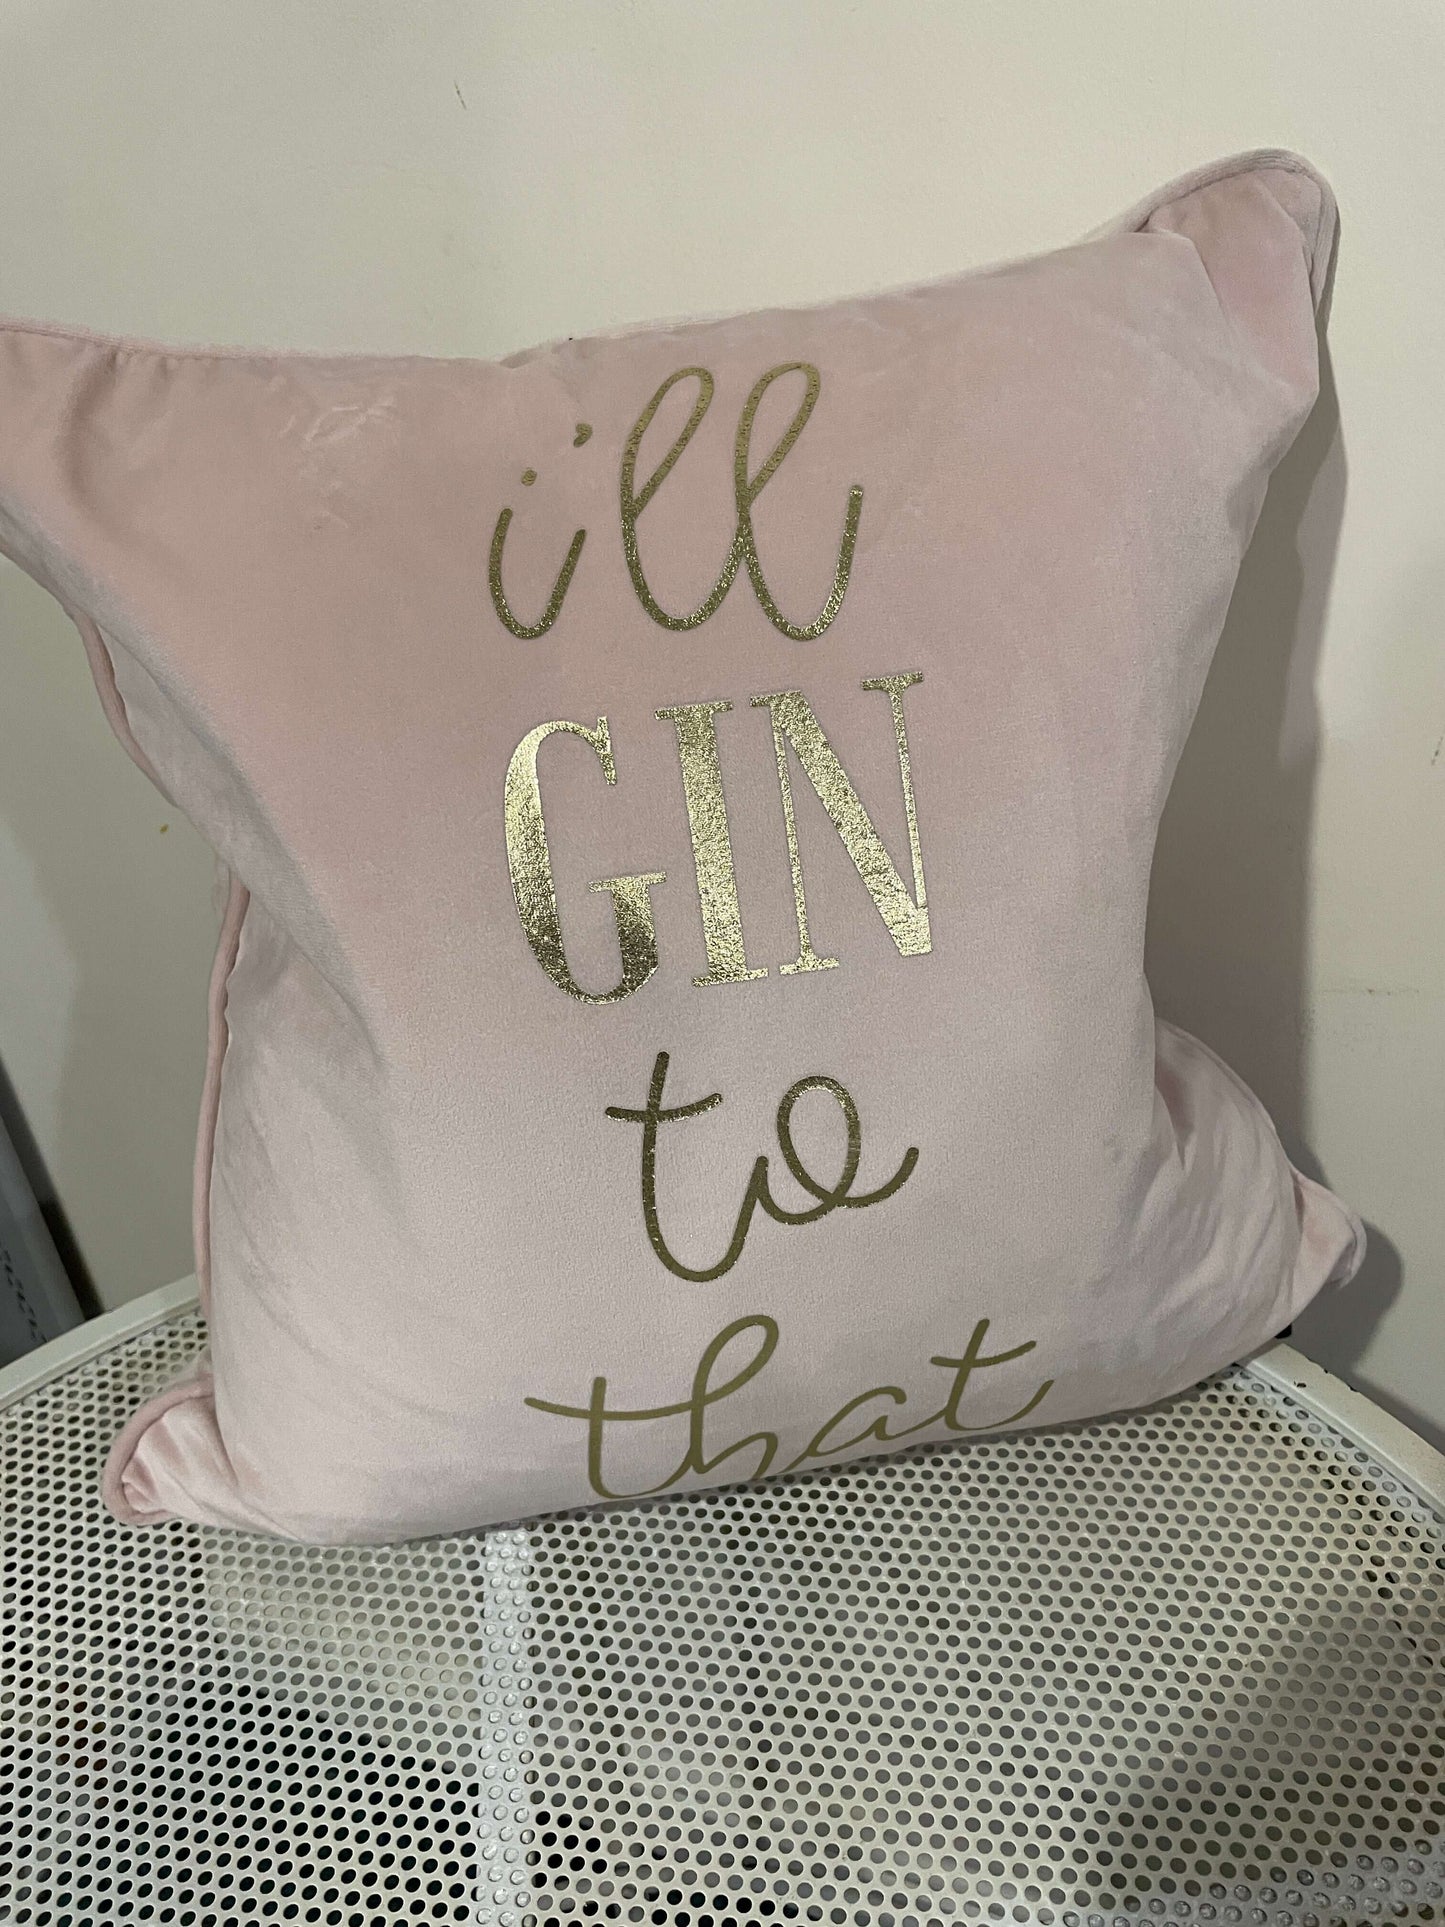 Sofa Cushion - I'll Gin to that